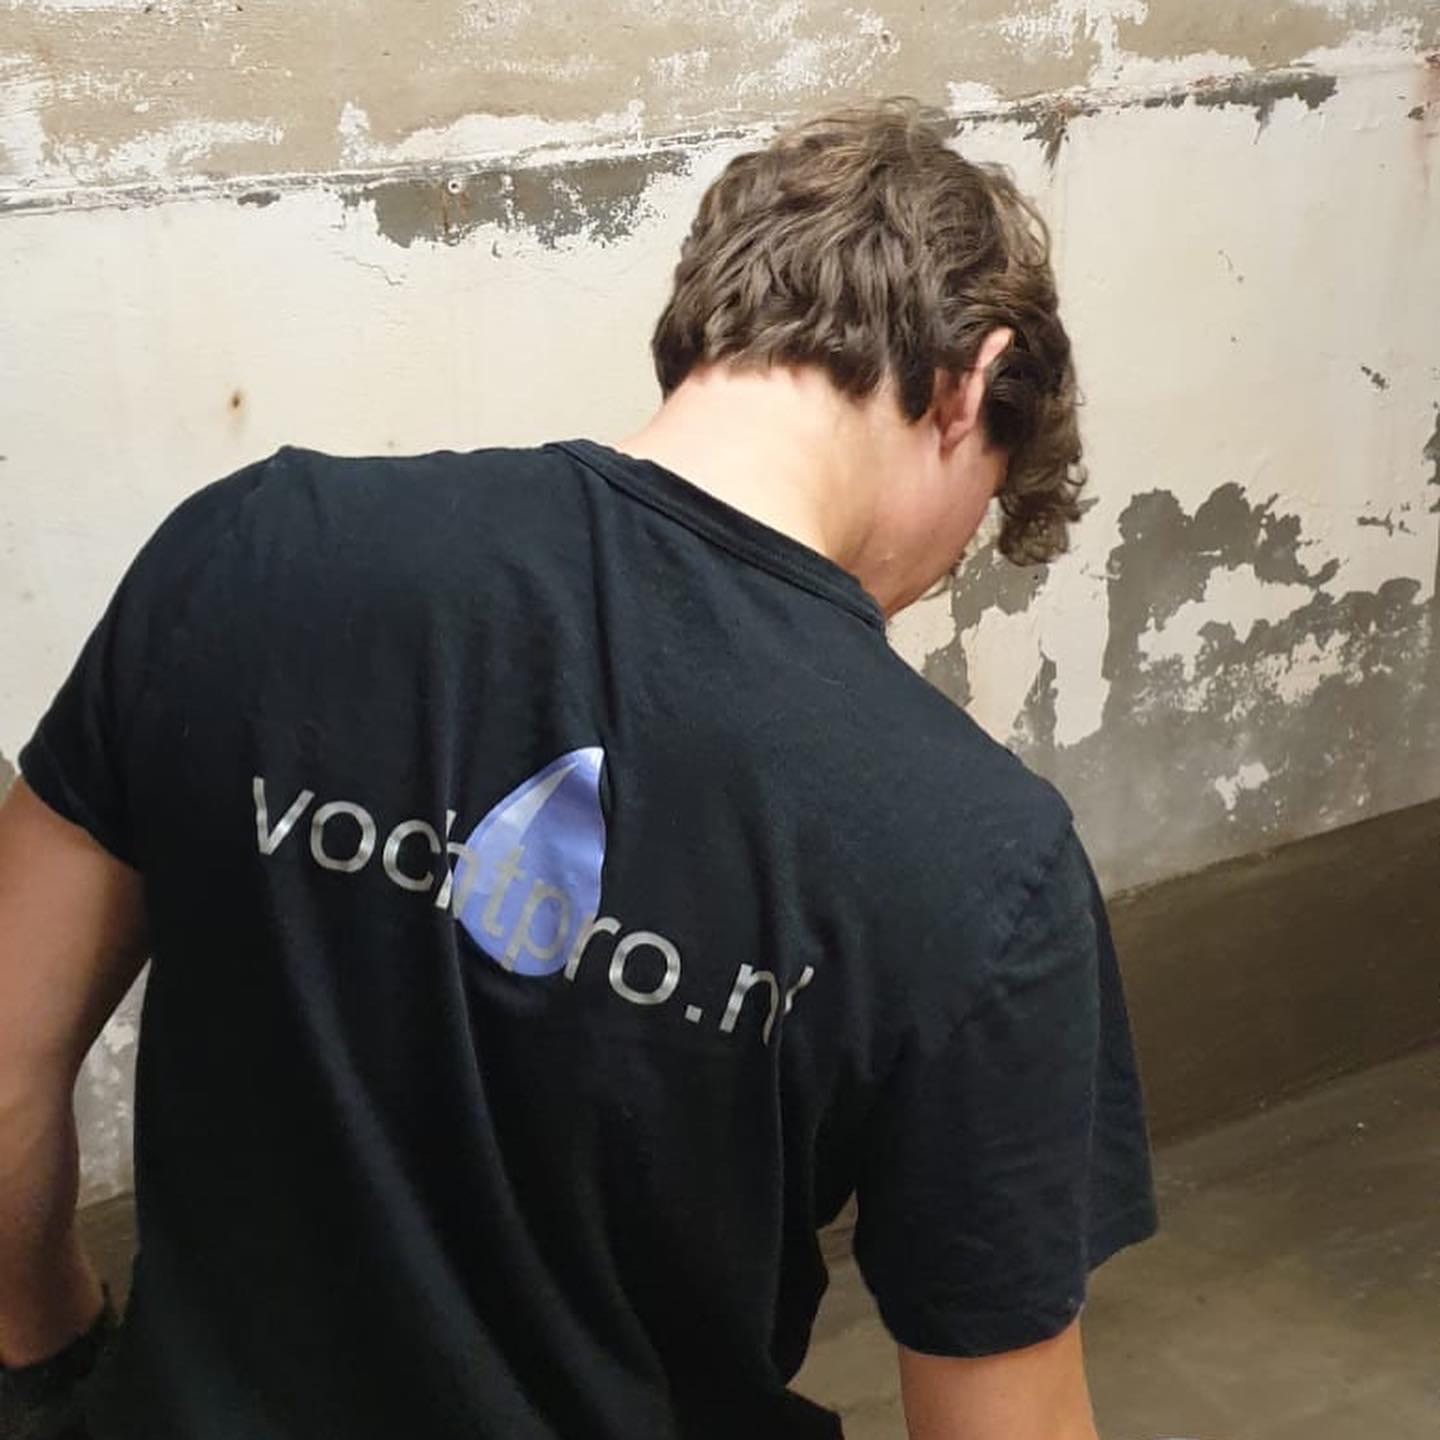 VochtPro medewerker maakt kelder waterdicht